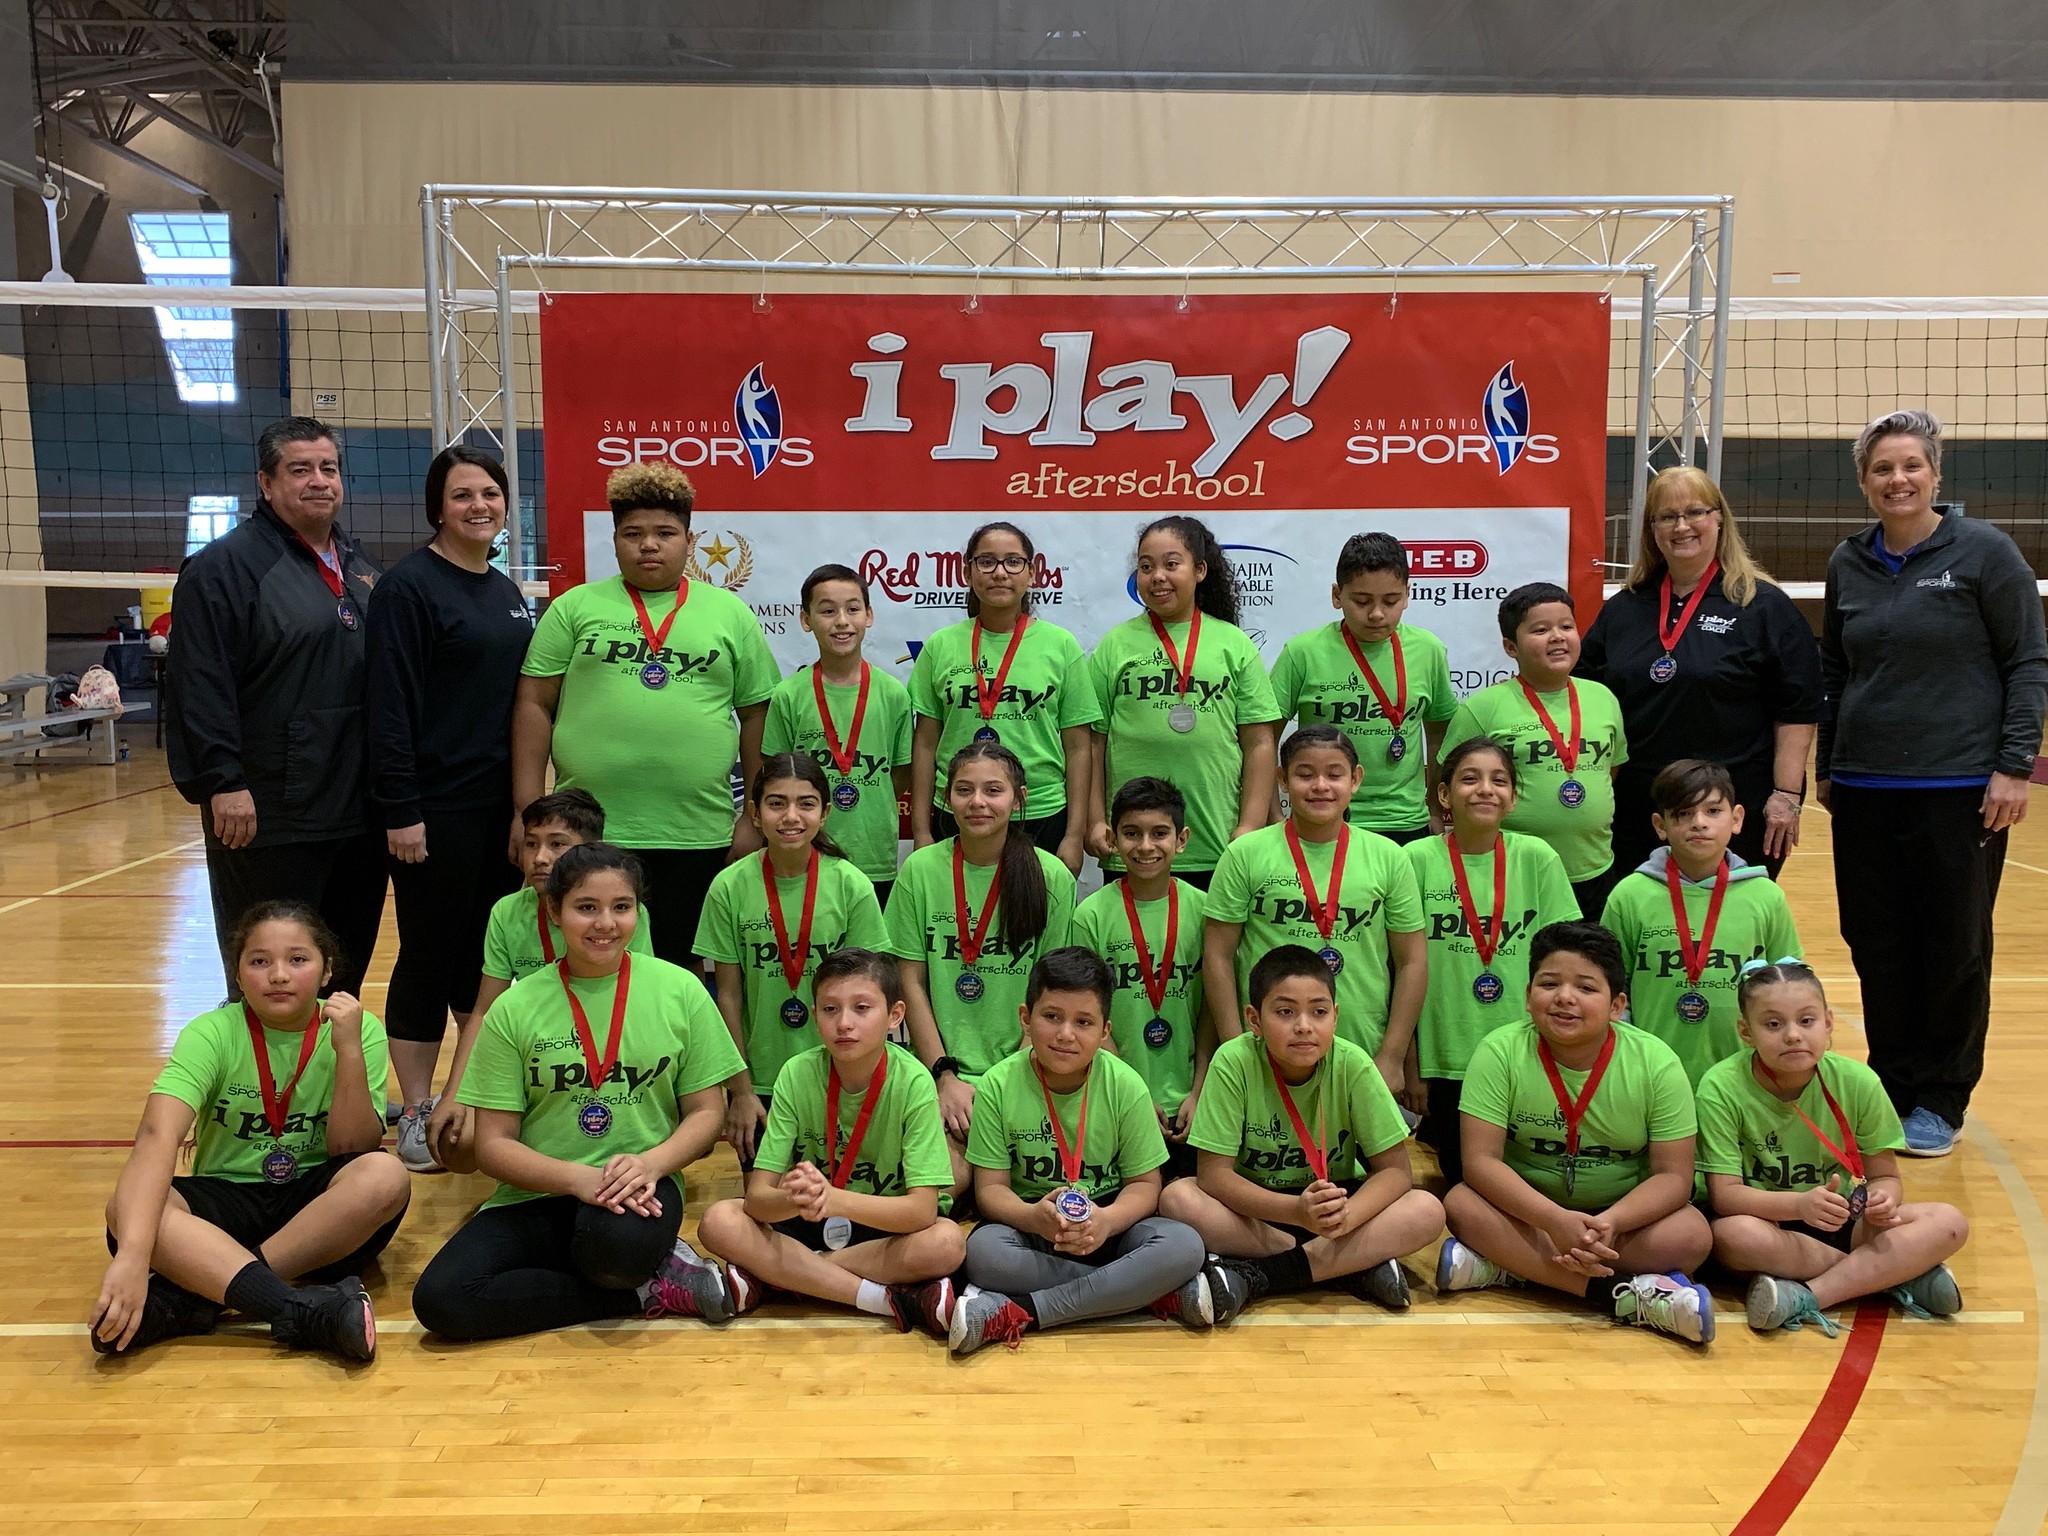 San Antonio Sports on Twitter "Congrats to Briscoe Elementary’s i play